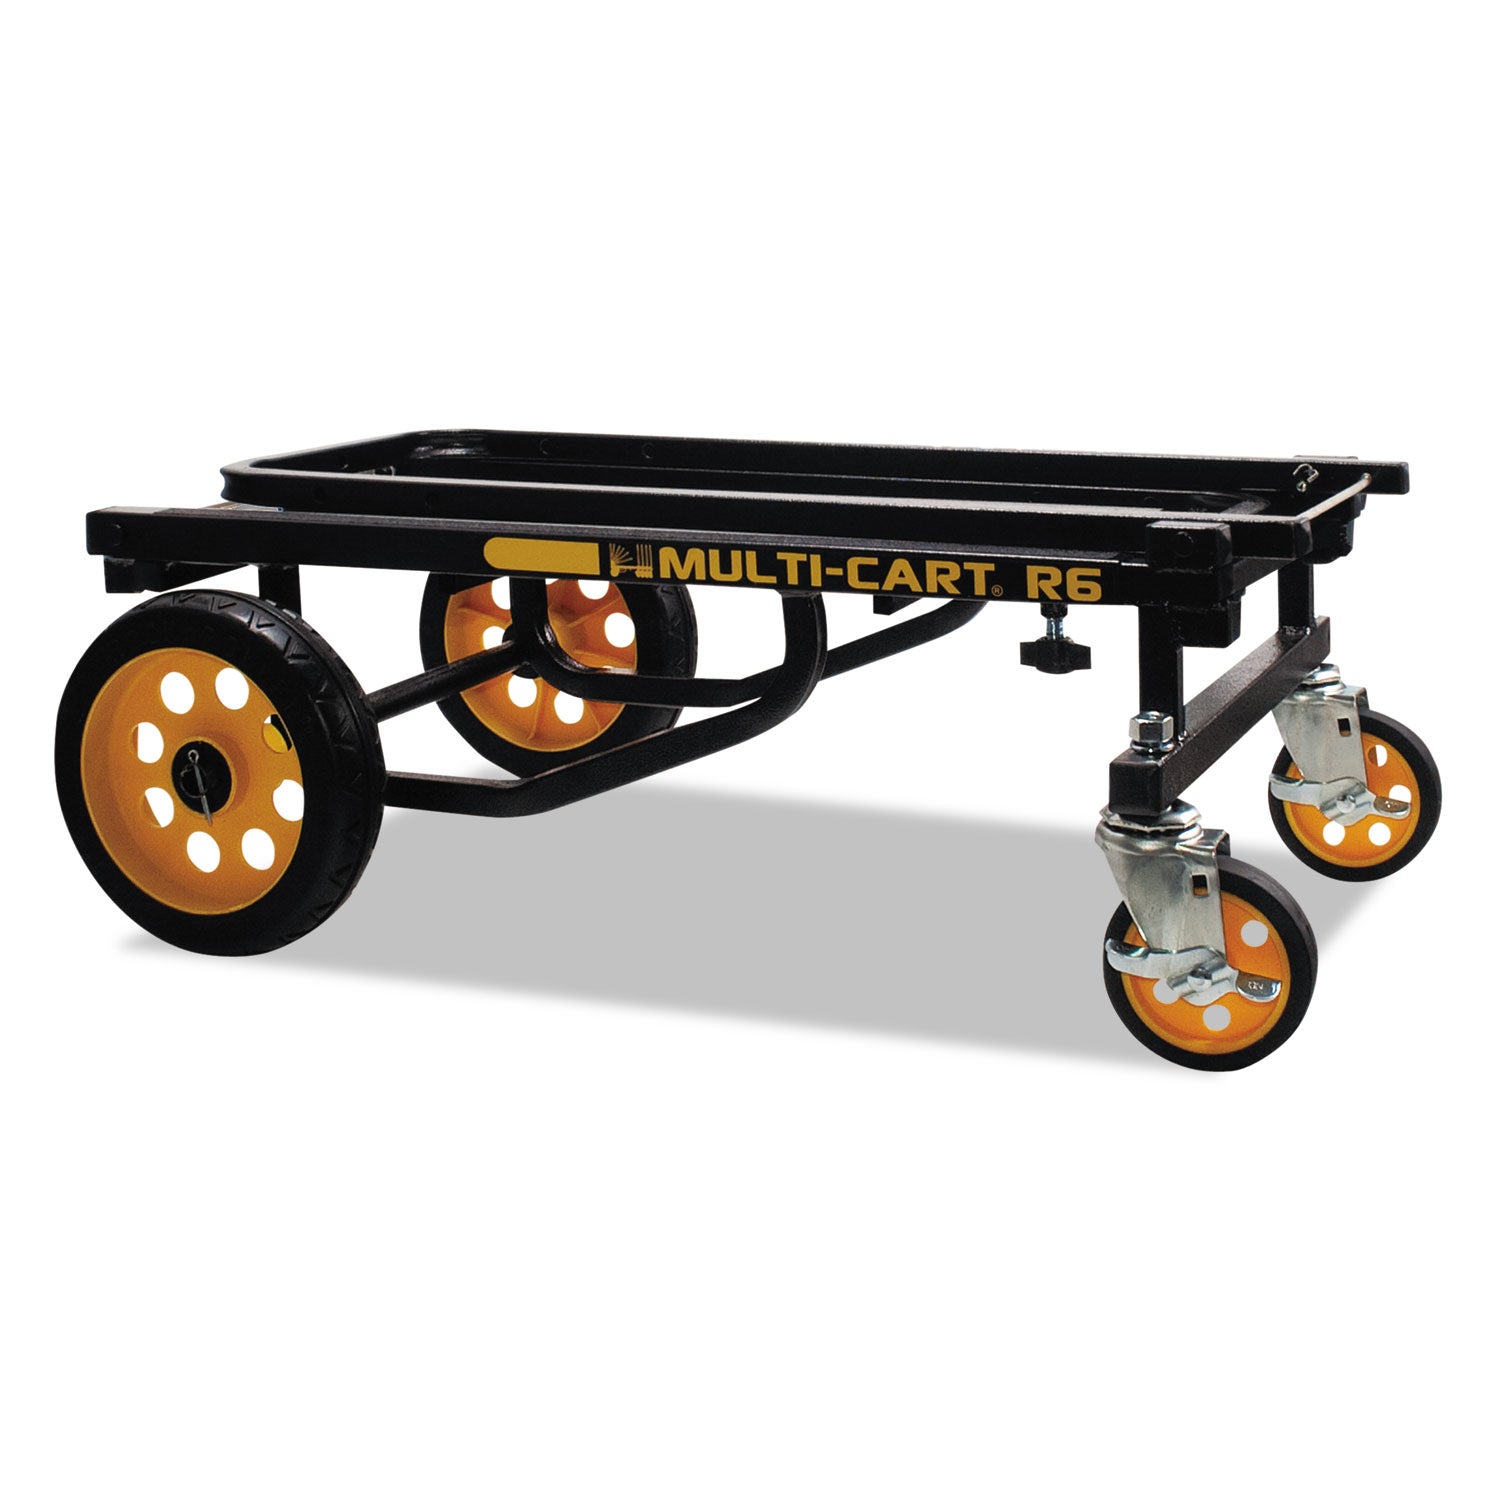 Multi-Cart 8-in-1 Cart, 500 lb Capacity, 33.25 x 17.25 x 42.5, Black - 